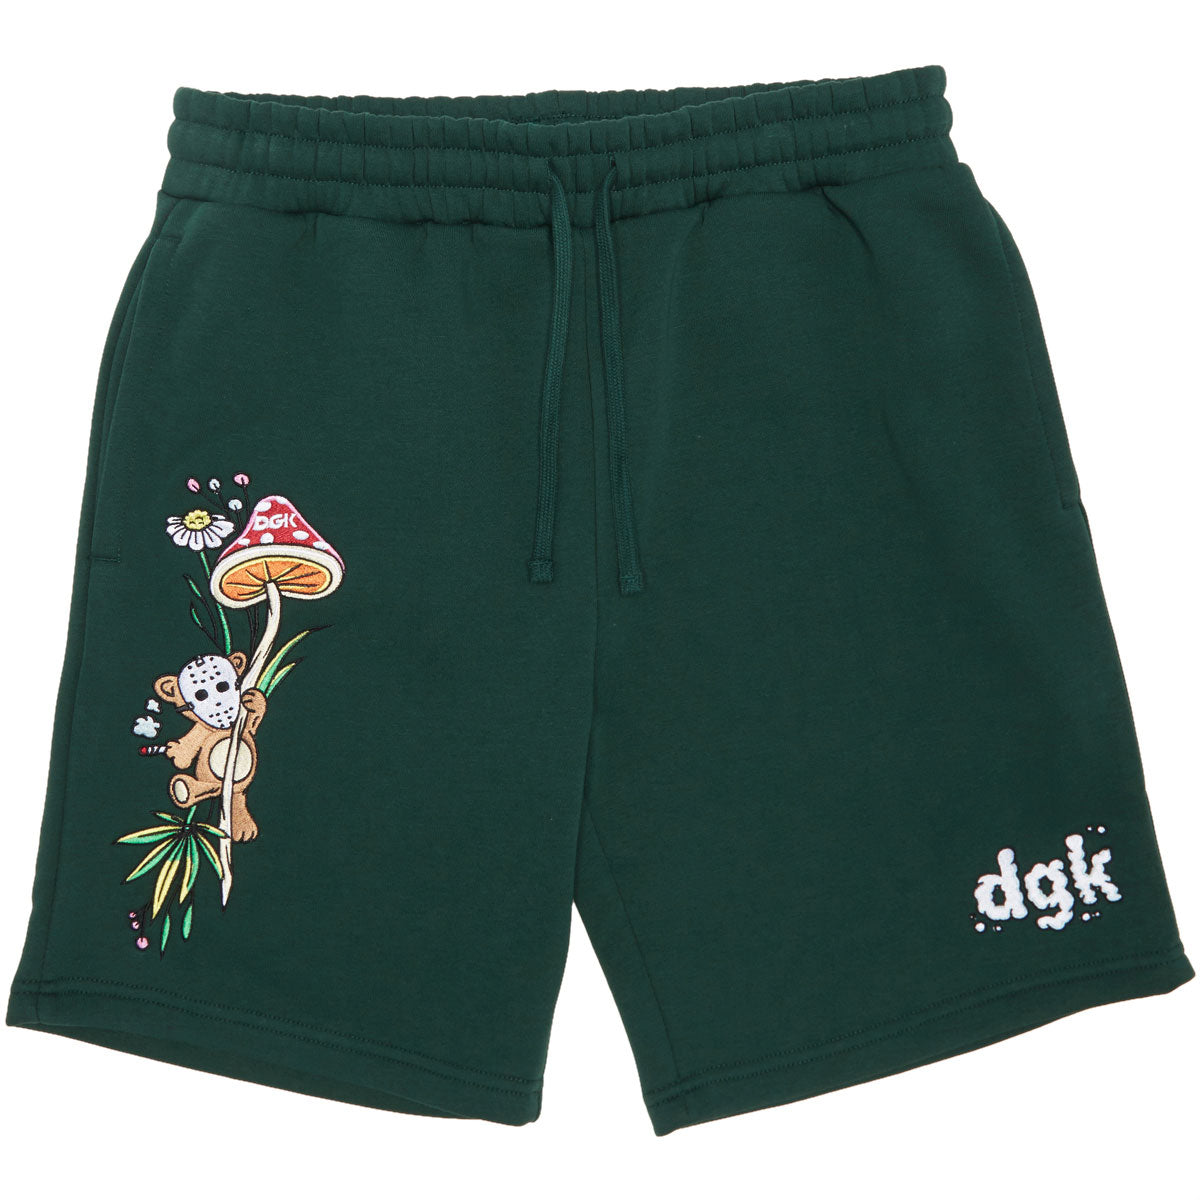 DGK Wonderland Fleece Shorts - Green image 1